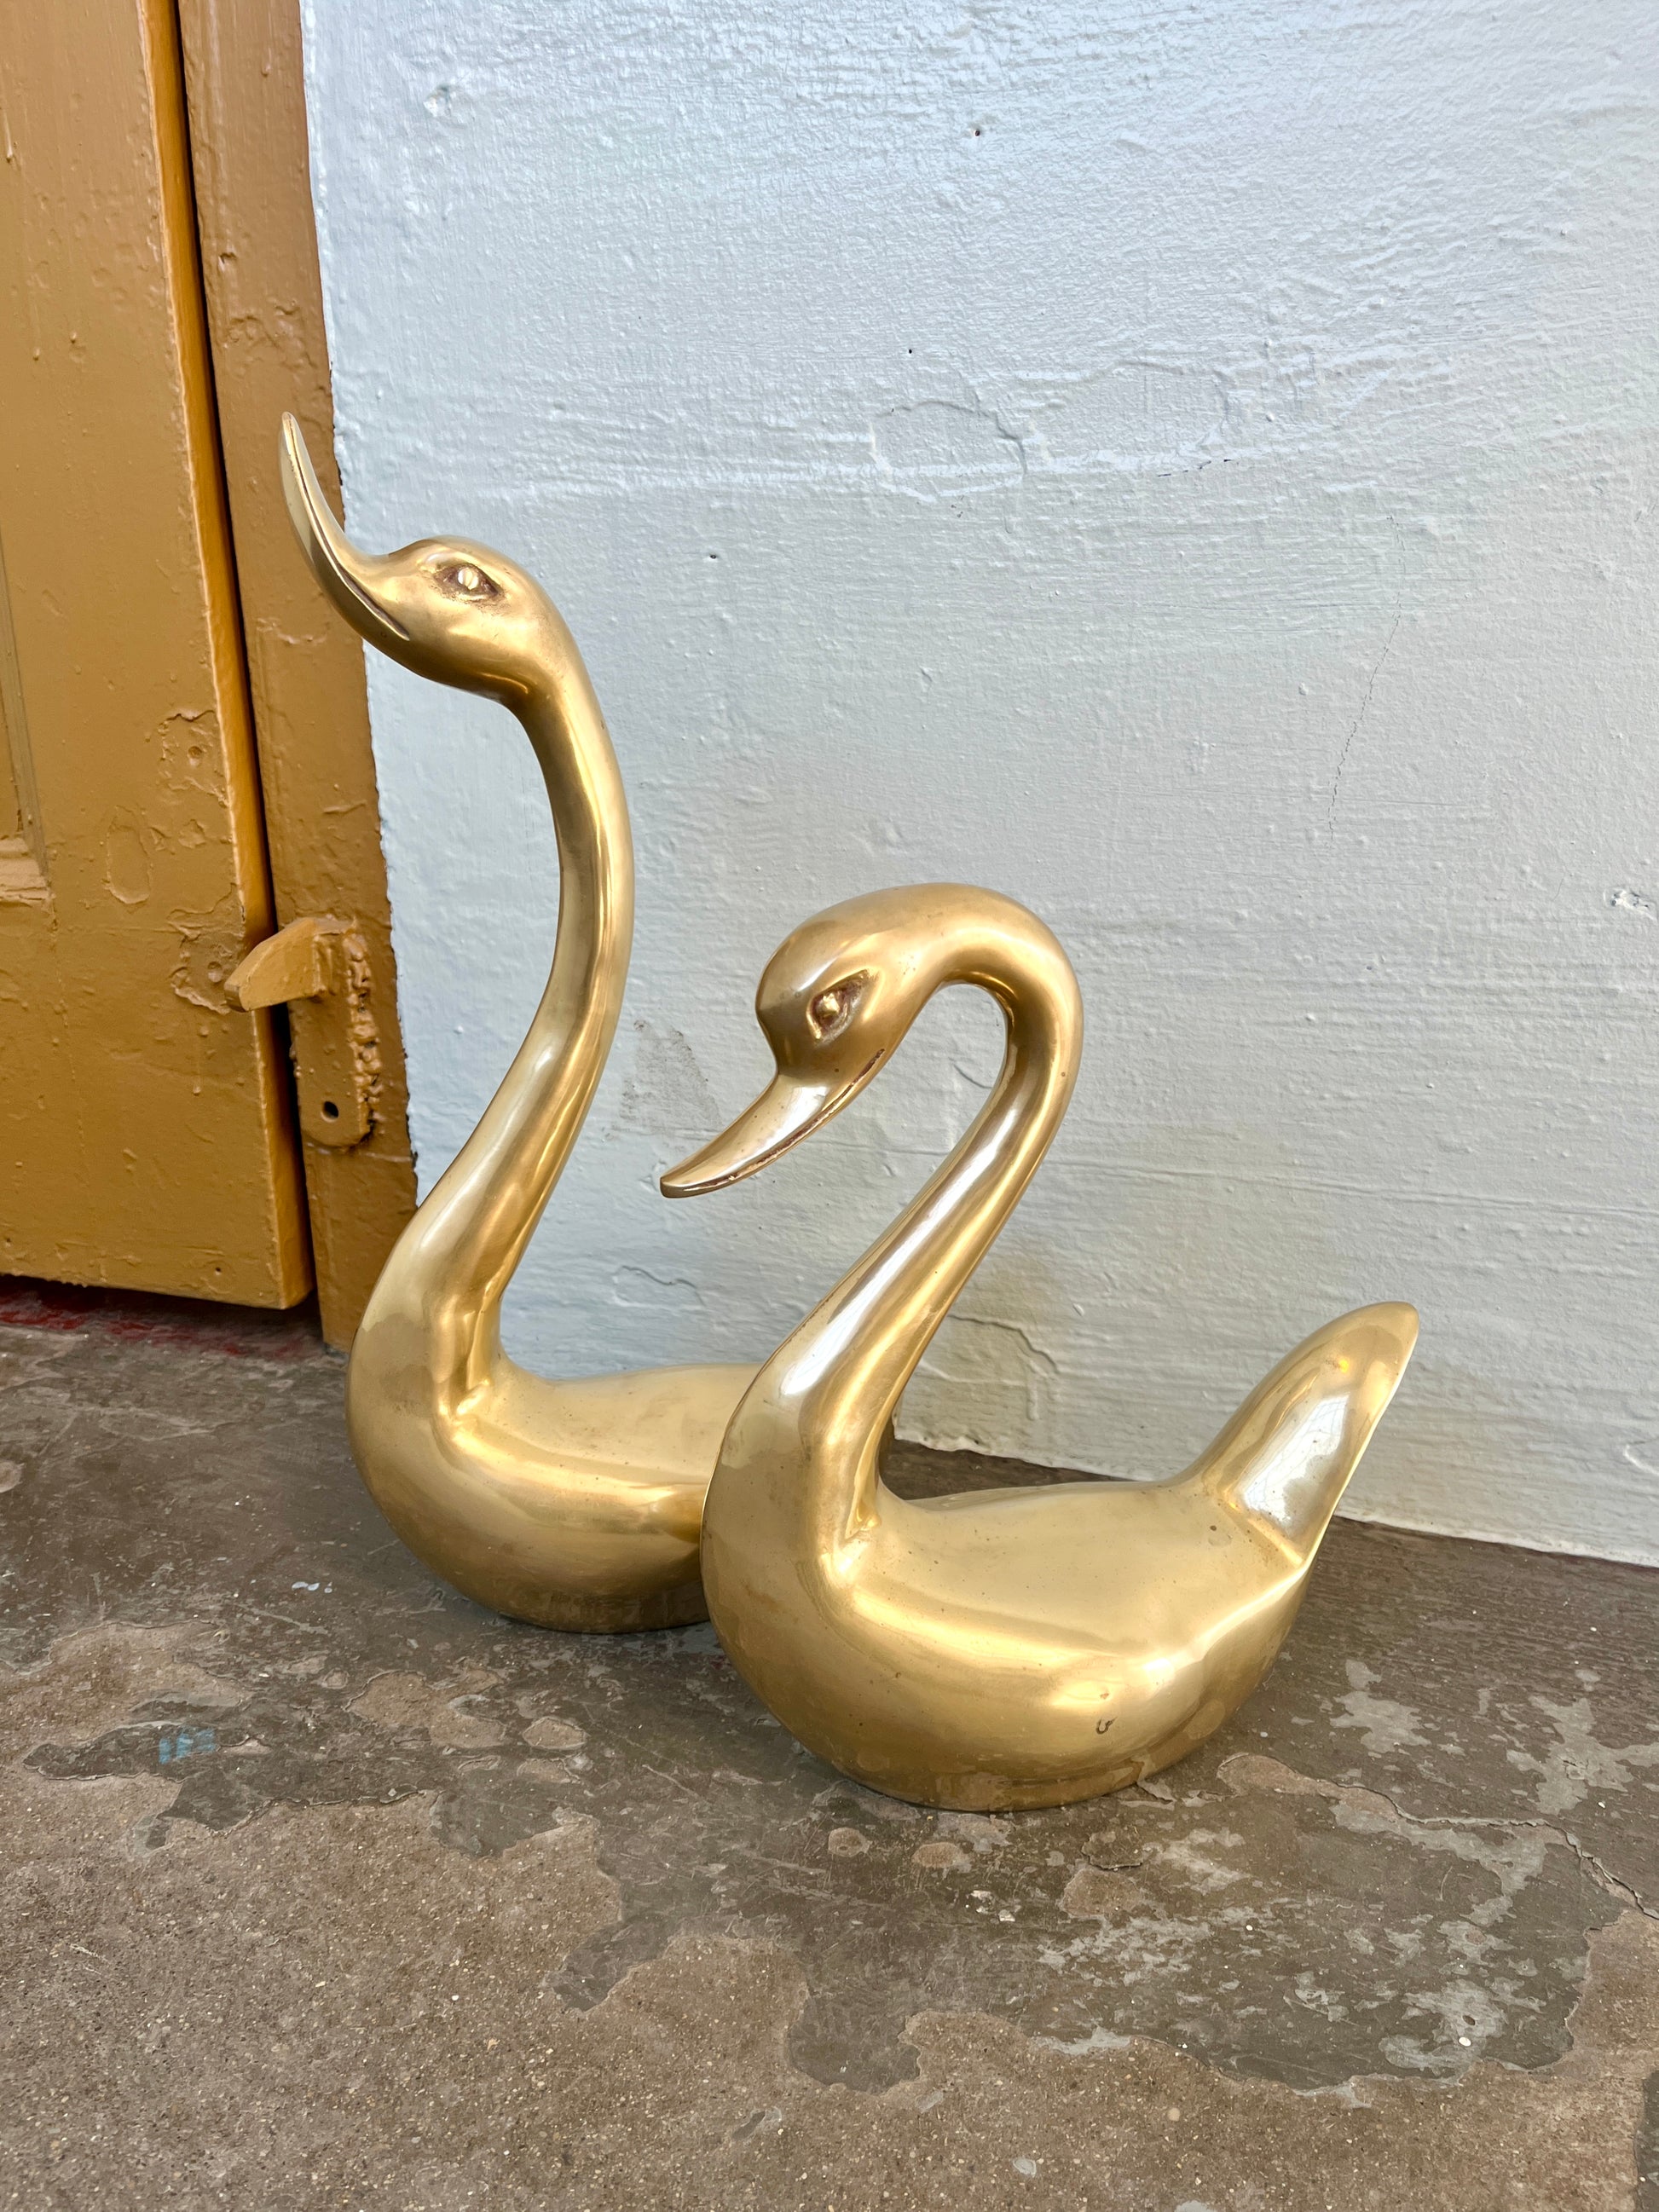 Vintage German Brass Swan Birds Figurines, Set of 2